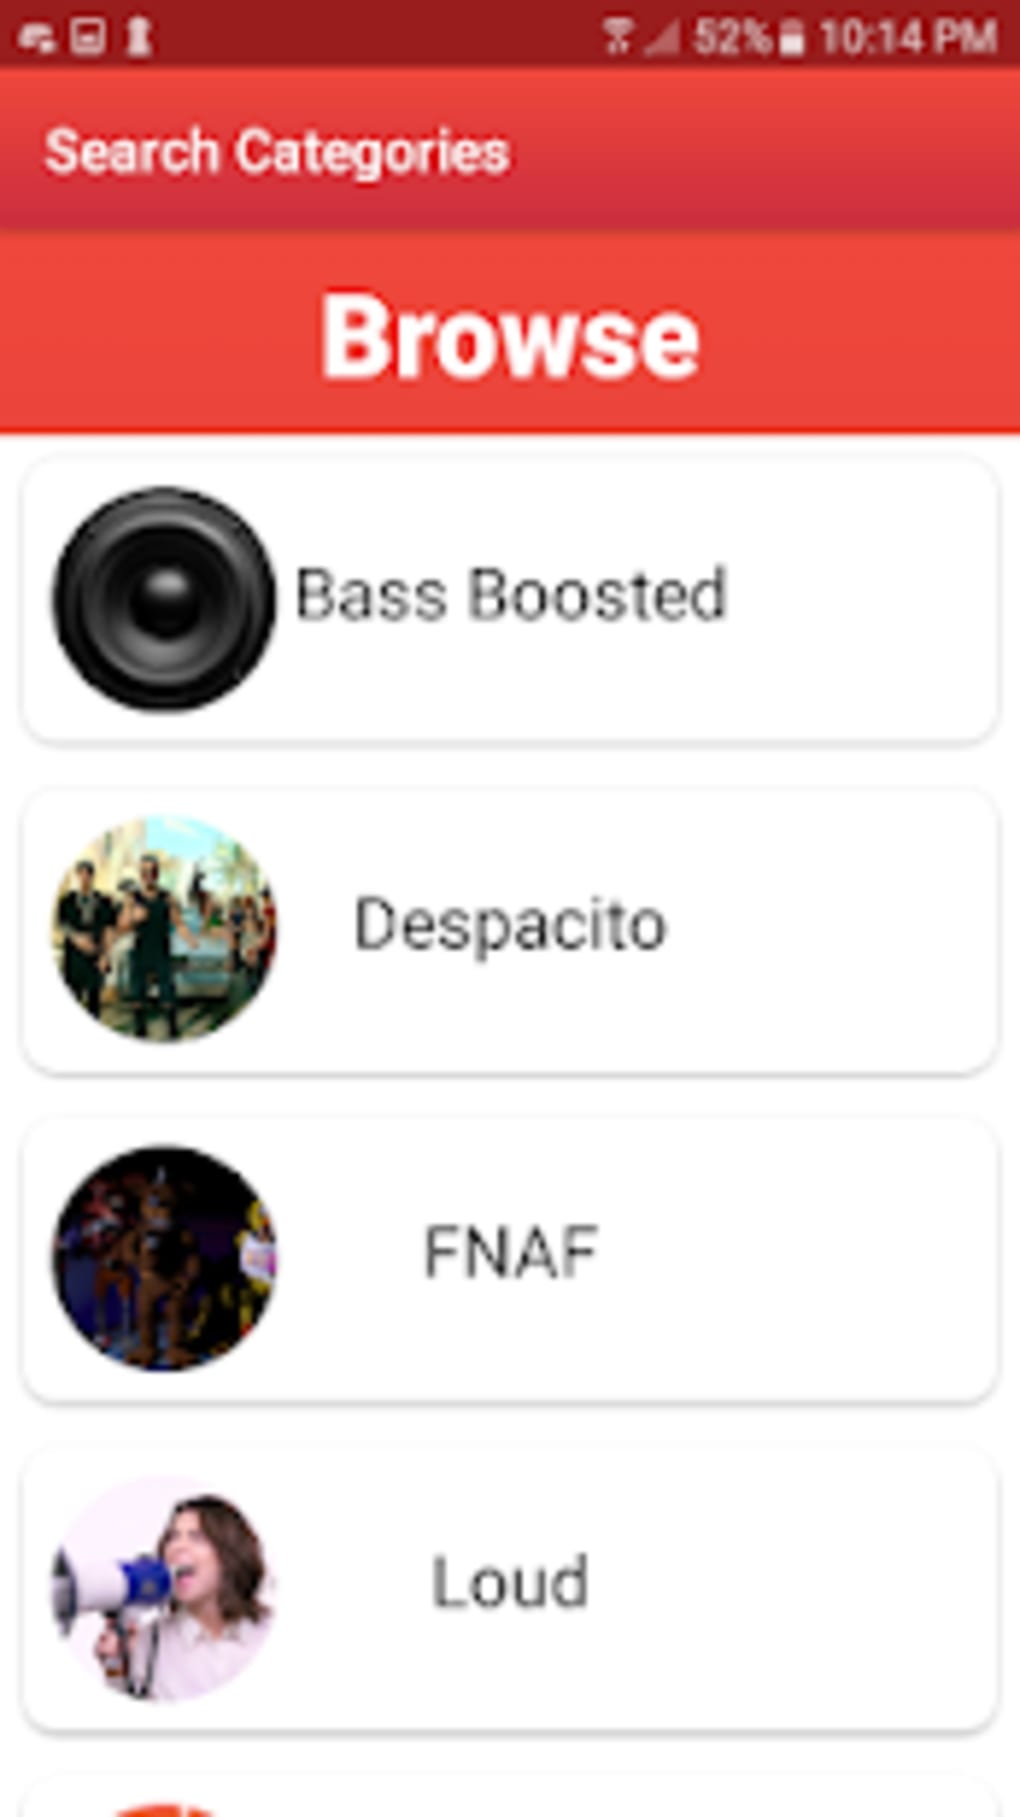 Download do APK de Roblox Music IDs para Android